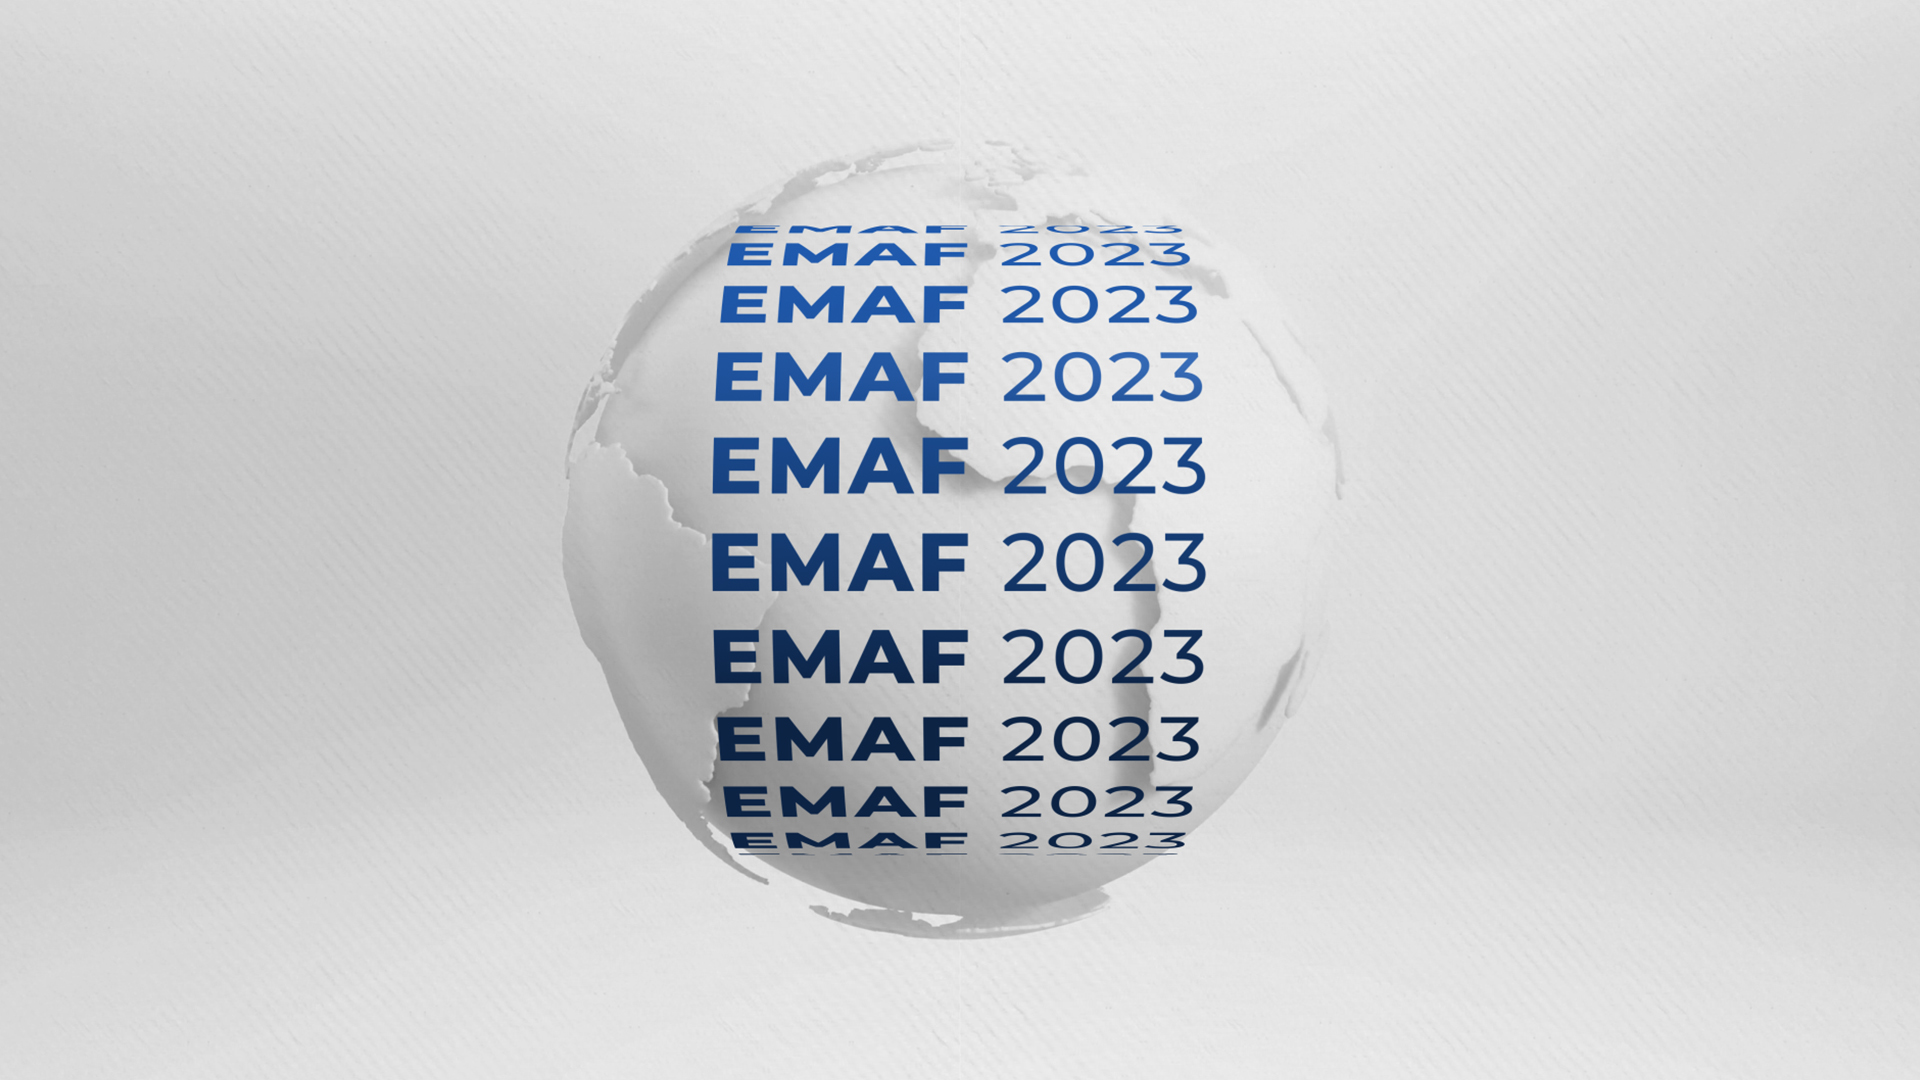 Pela 19ª vez consecutiva, a AMOB marca presença na EMAF.